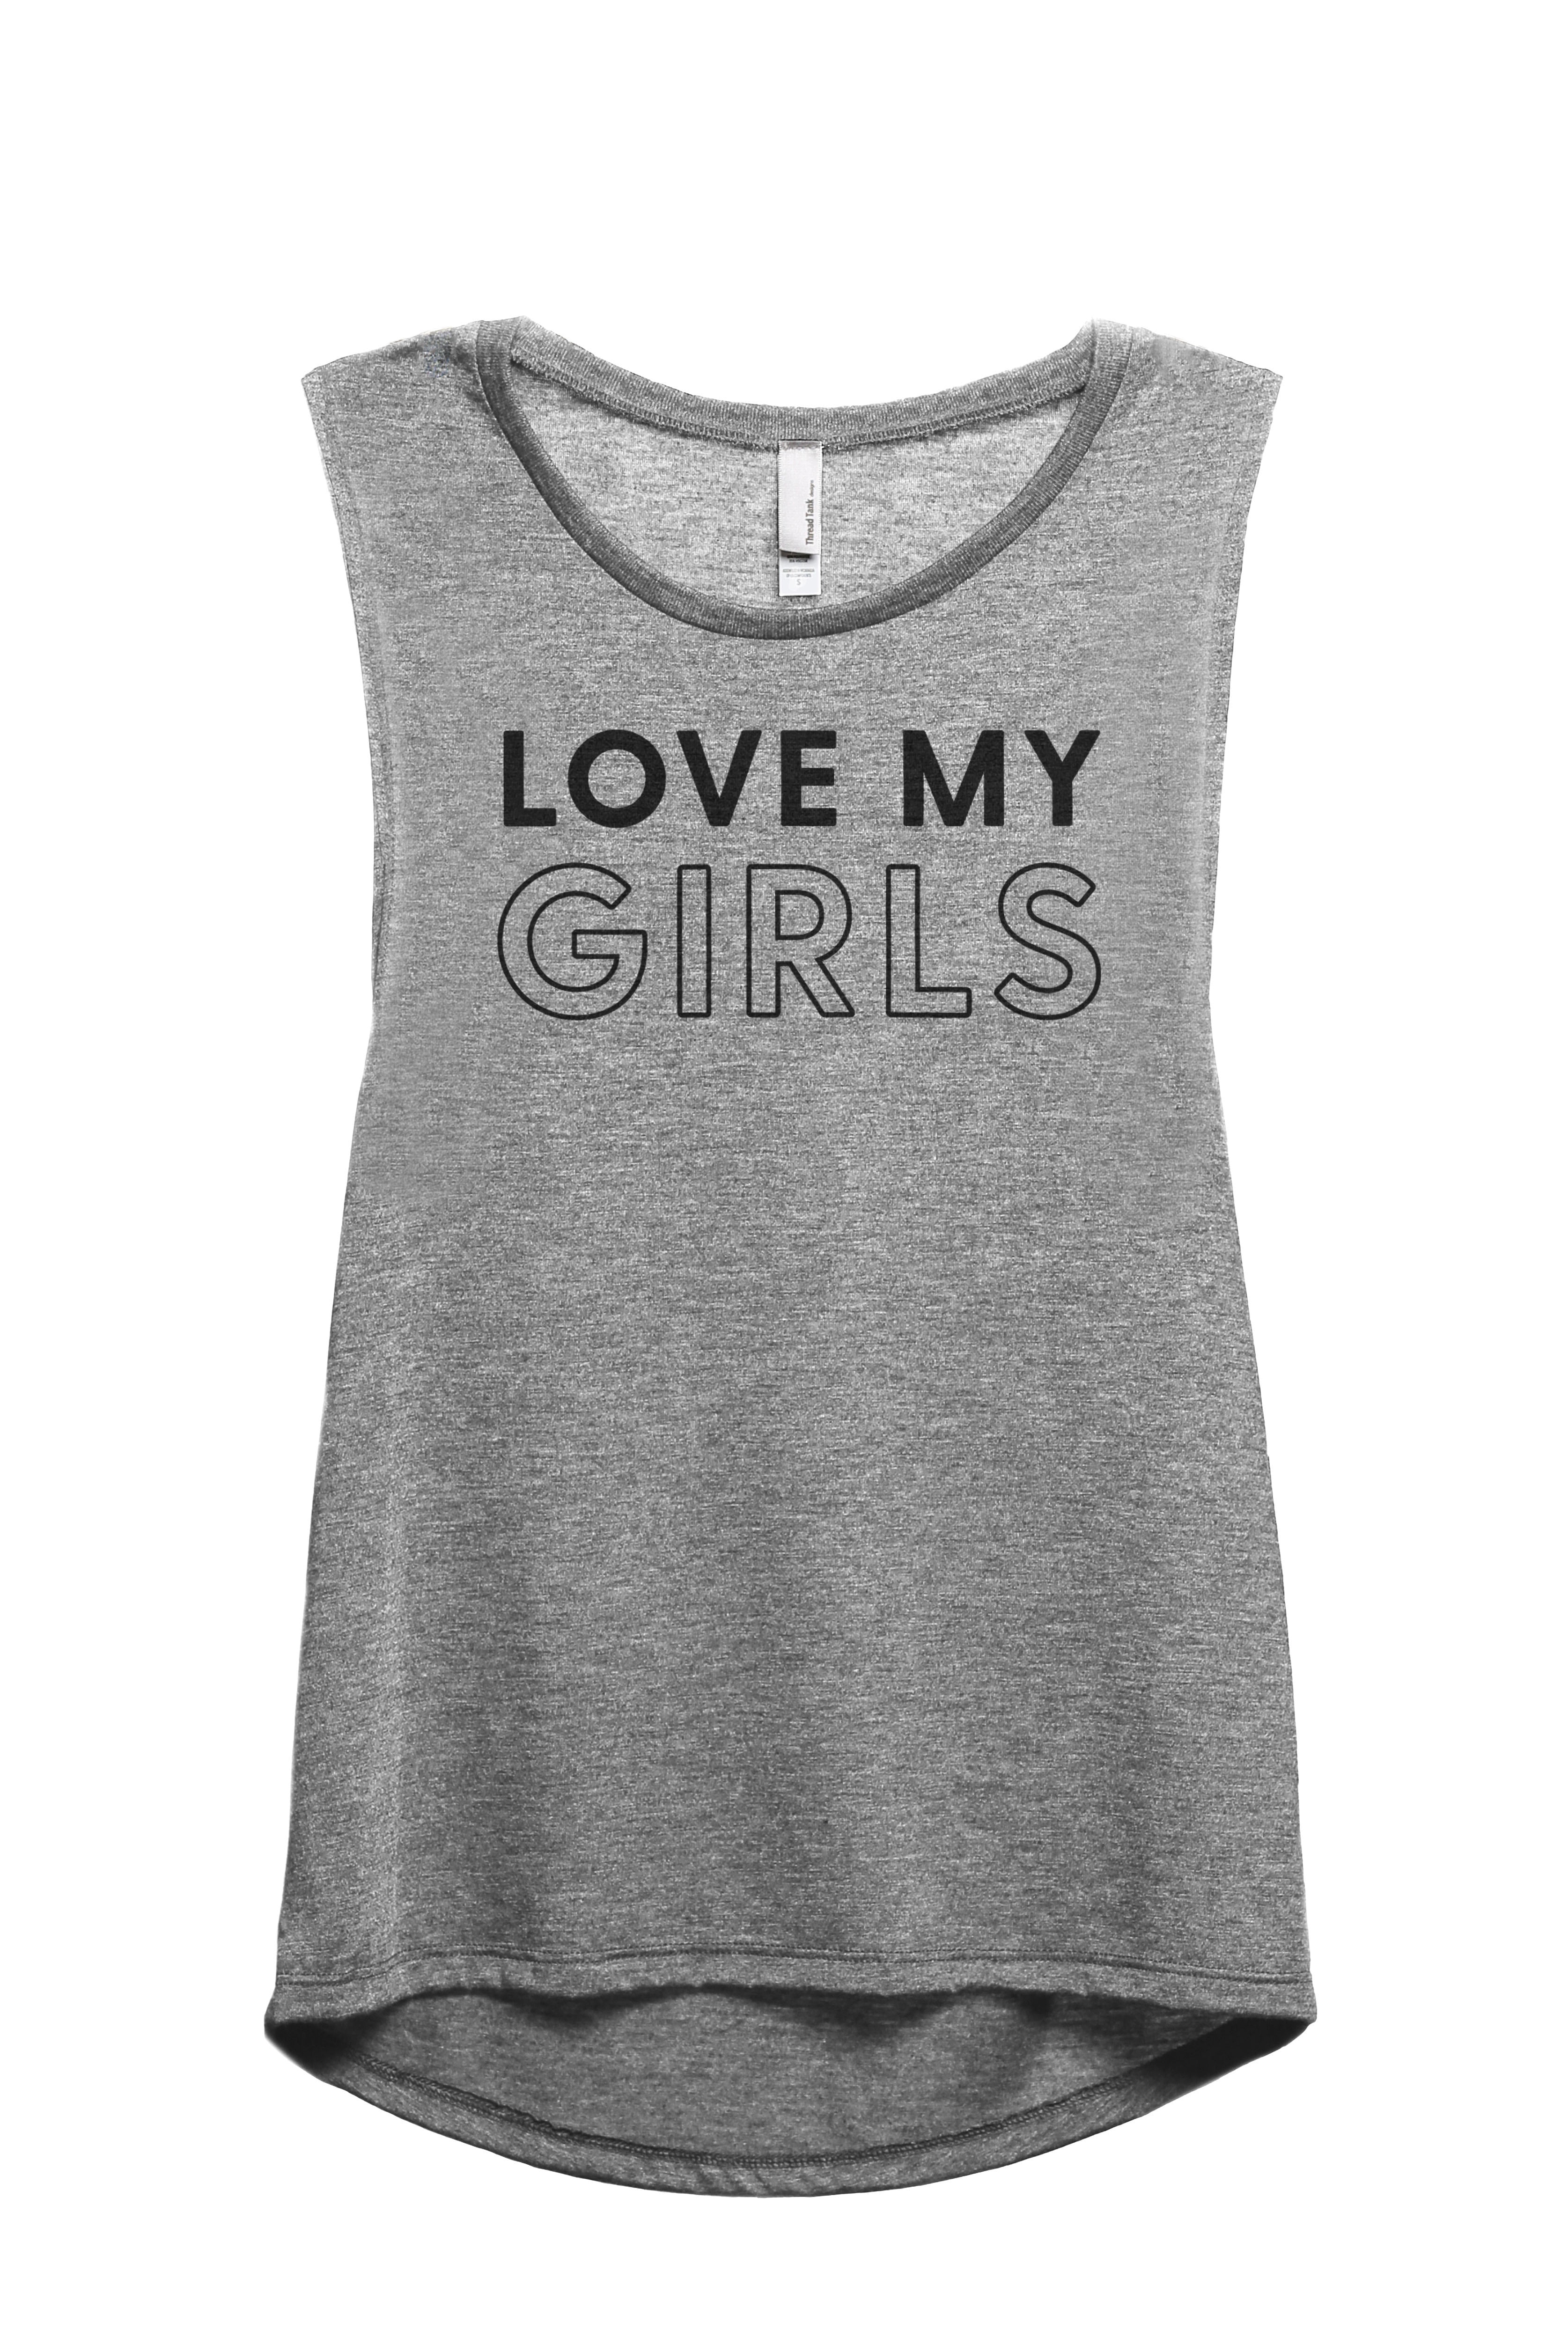 Love My Girls Women's Fashion Sleeveless Muscle Workout Yoga Tank Top  Heather Grey Grey Small 